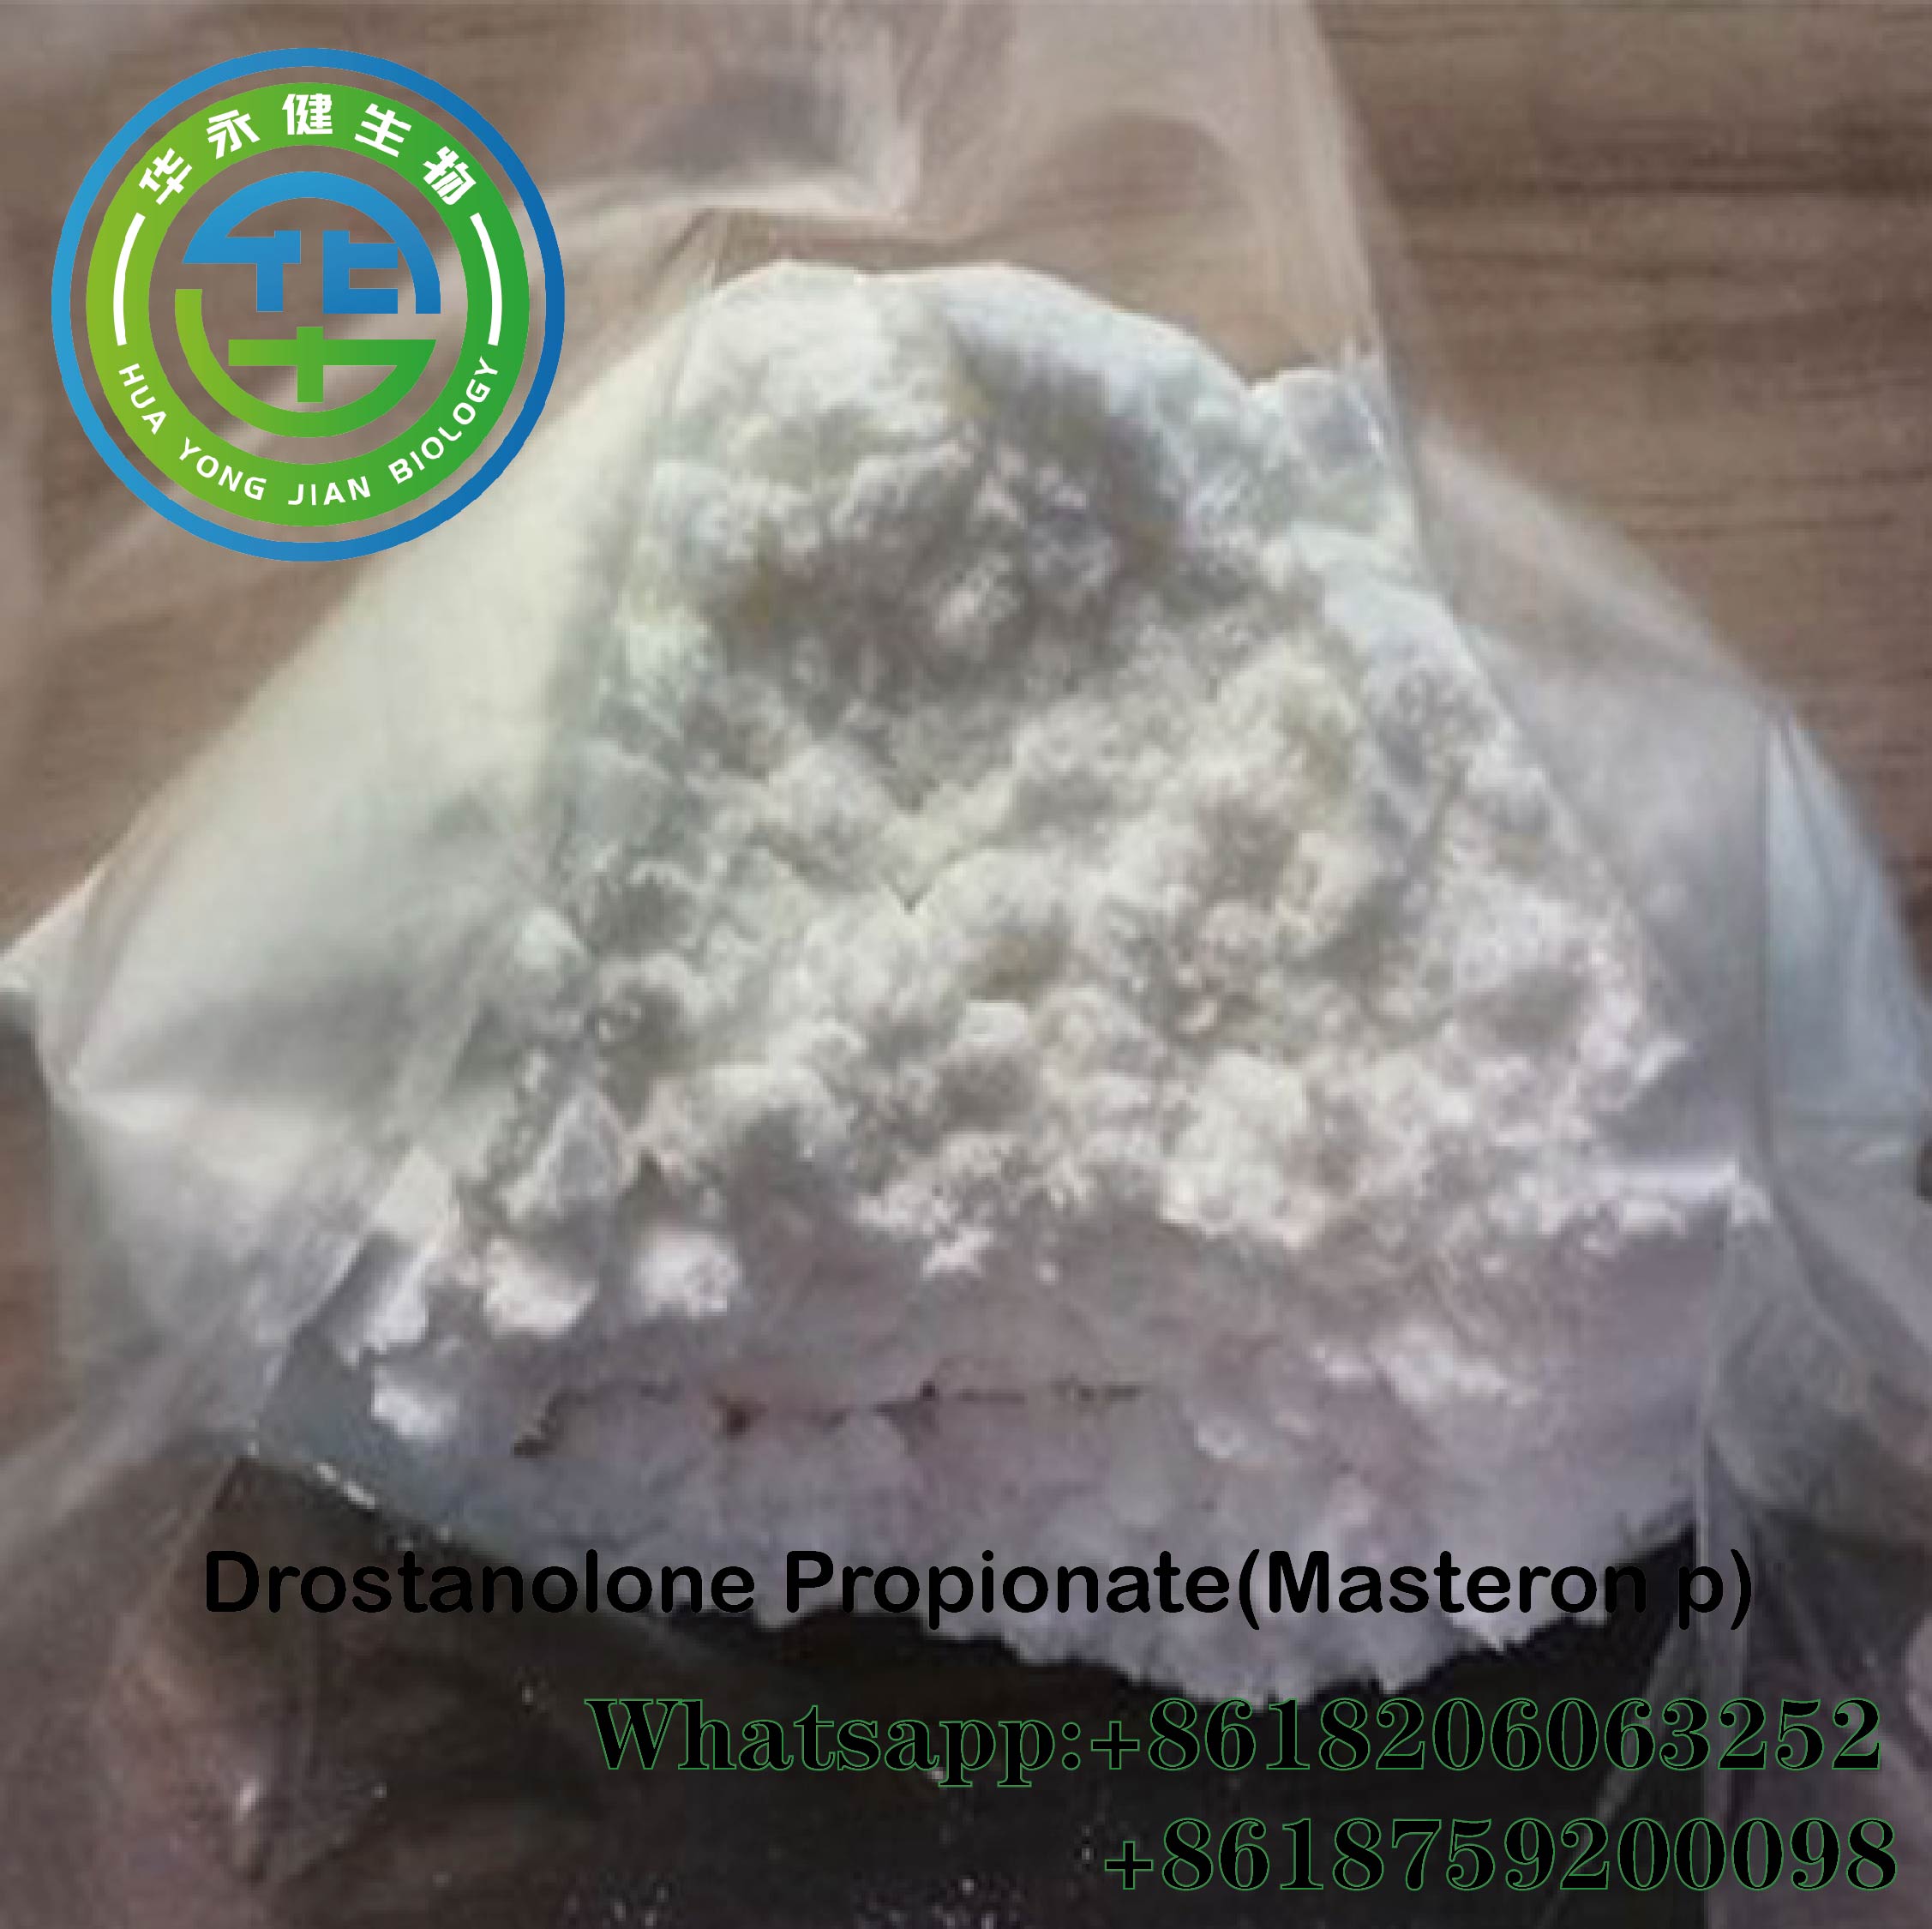 Pols de propionat de Drostanolone Masteron Steroid Professional DPP per a la força corporal Masteron P CasNO.521-12-0 Imatge destacada